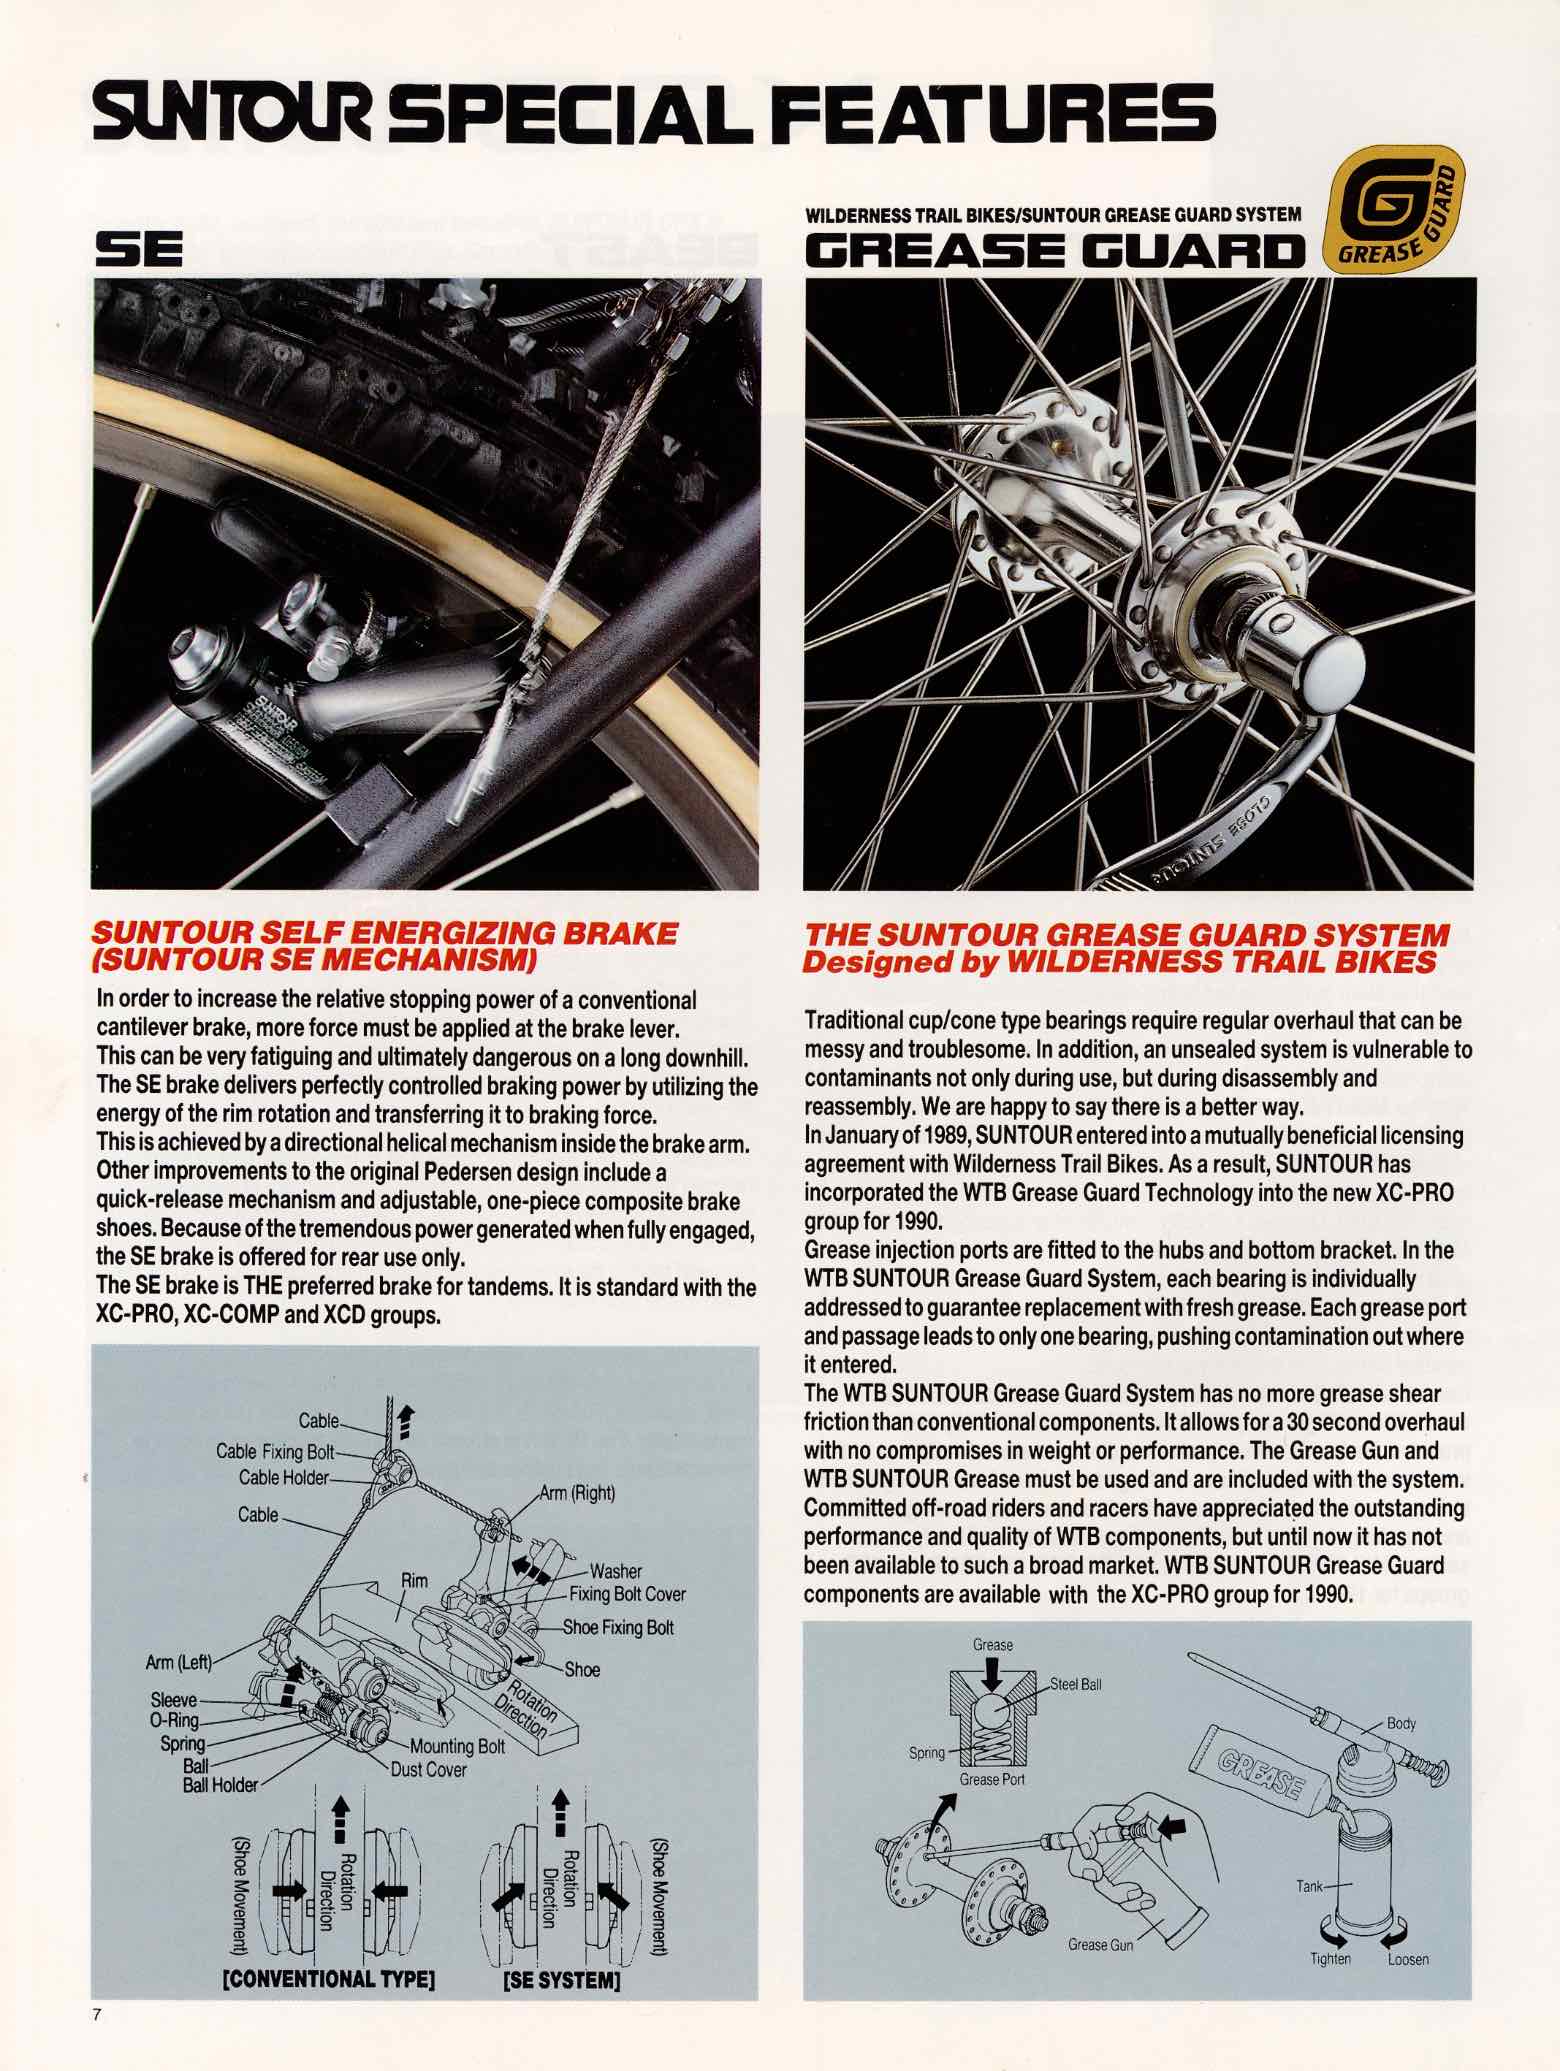 SunTour Bicycle Equipment Catalog 1990 - Page 7 main image